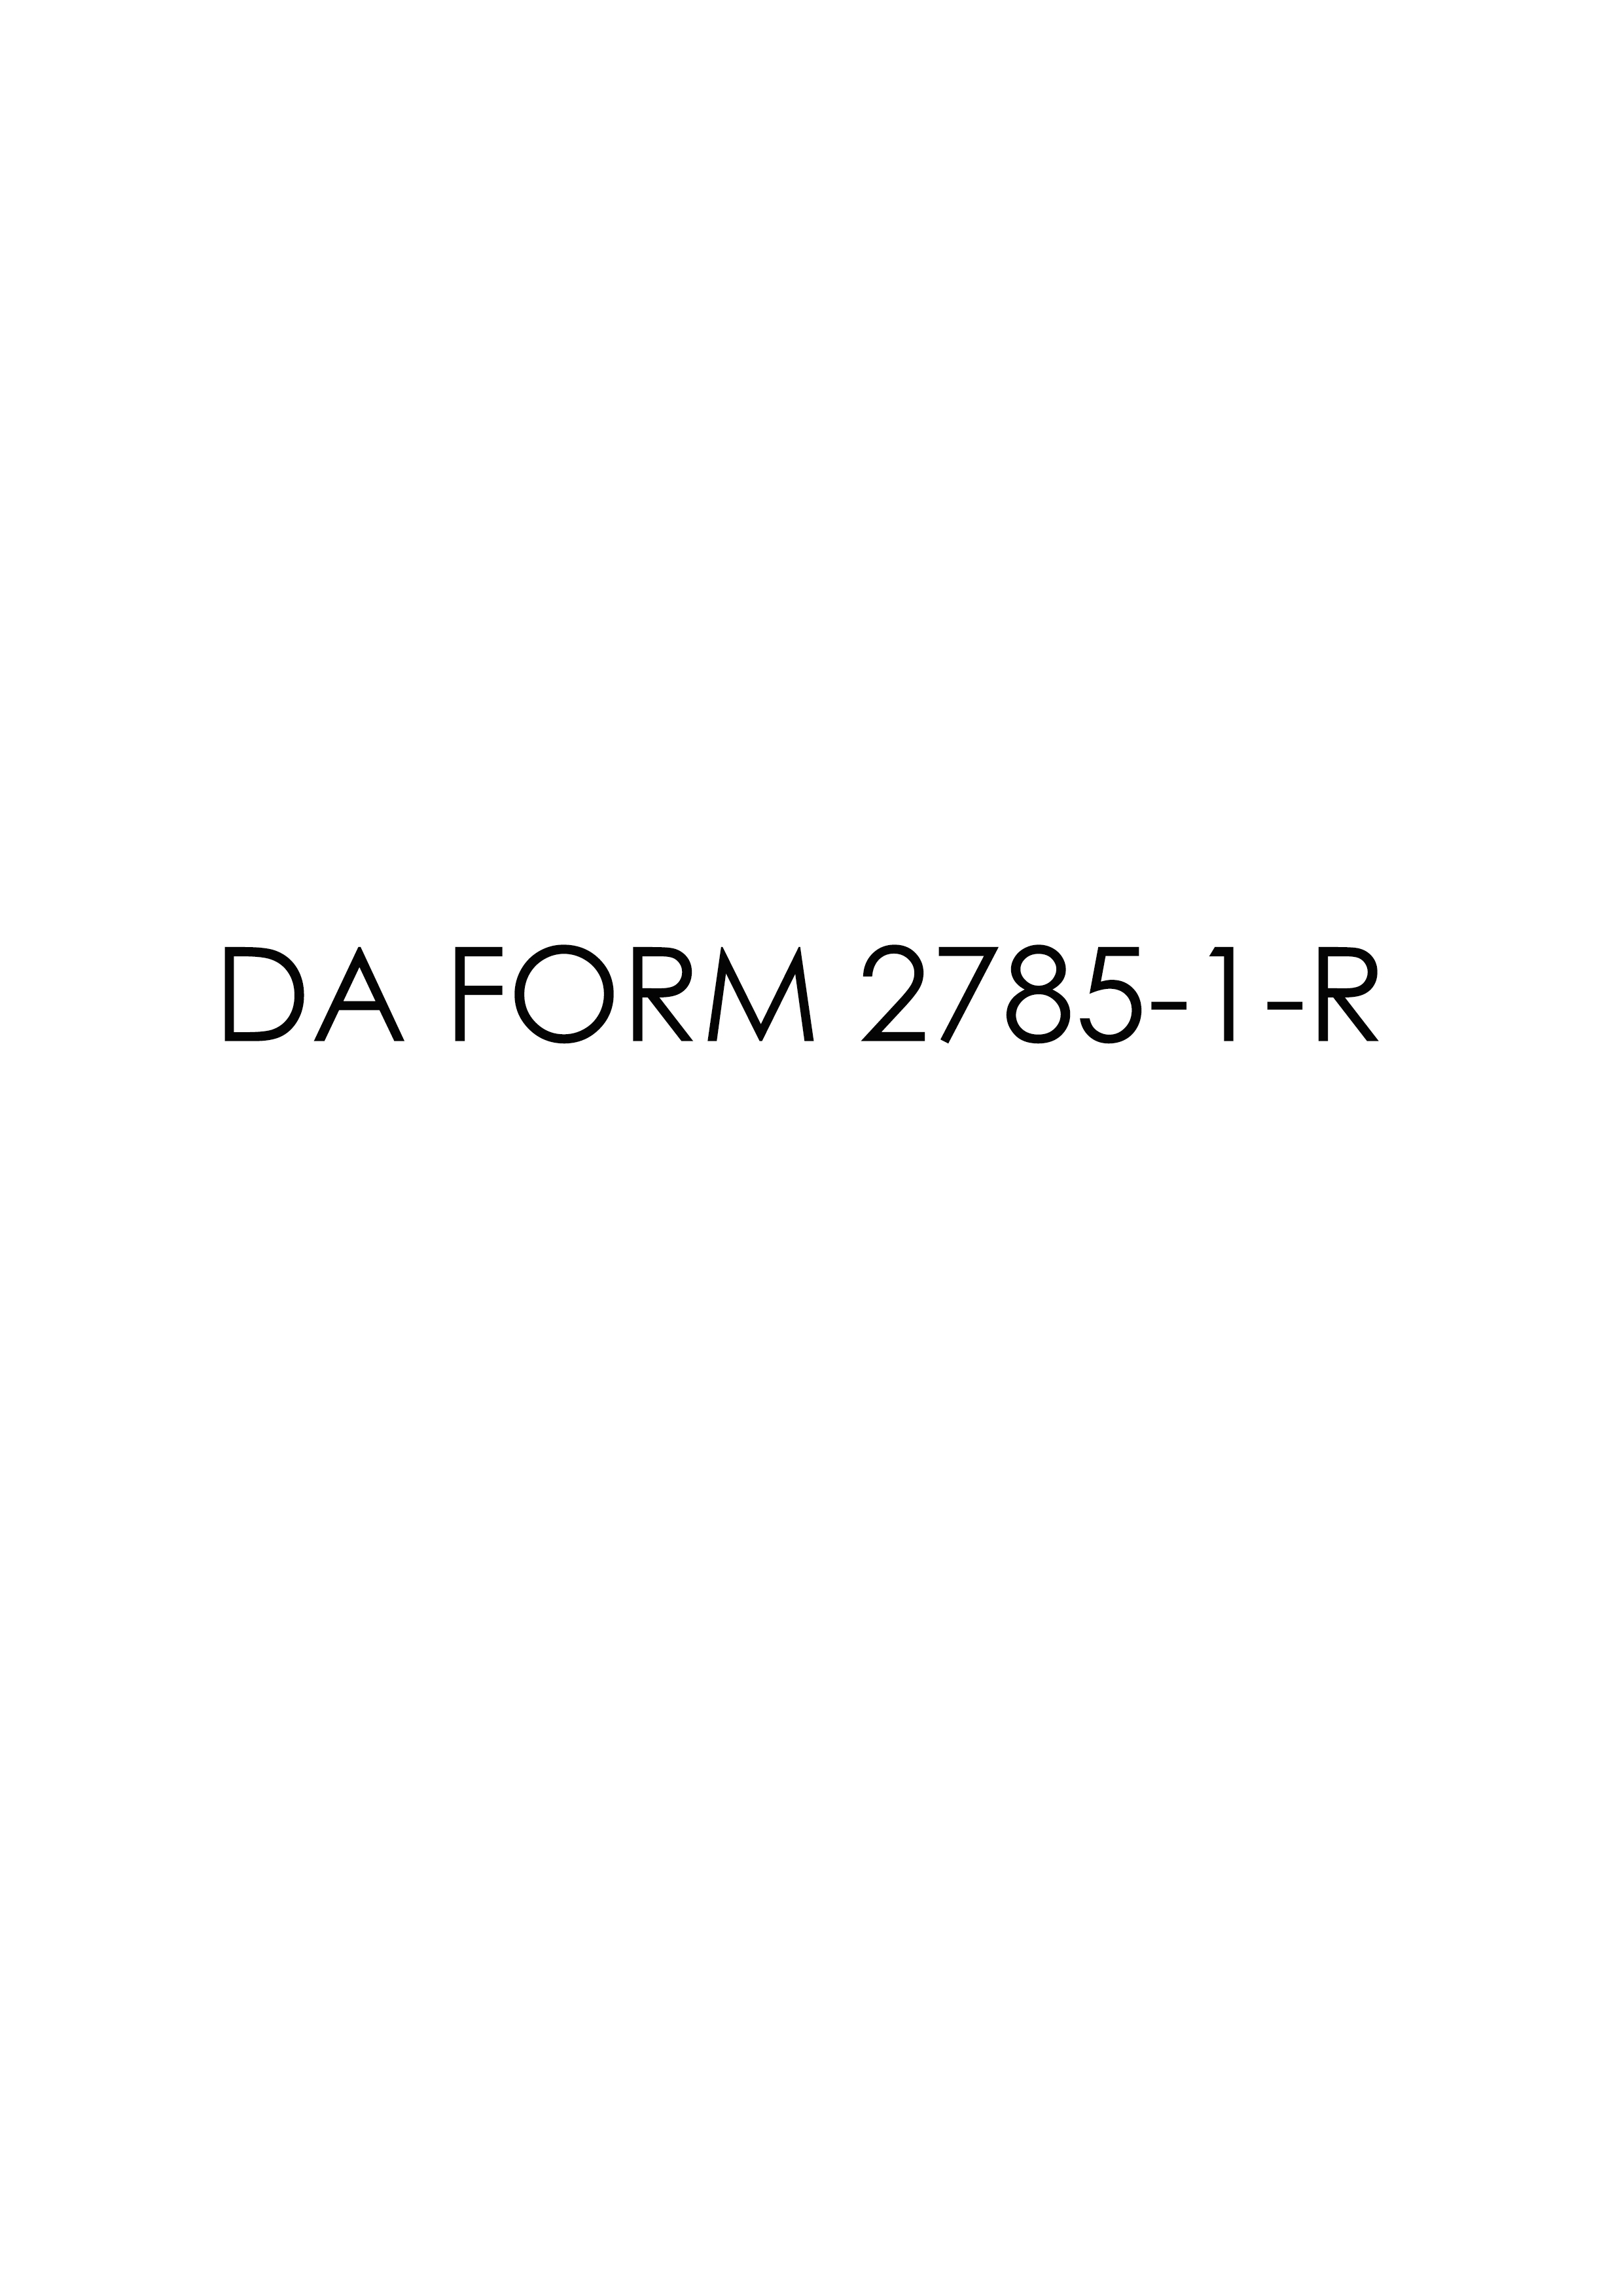 da Form 2785-1-R fillable